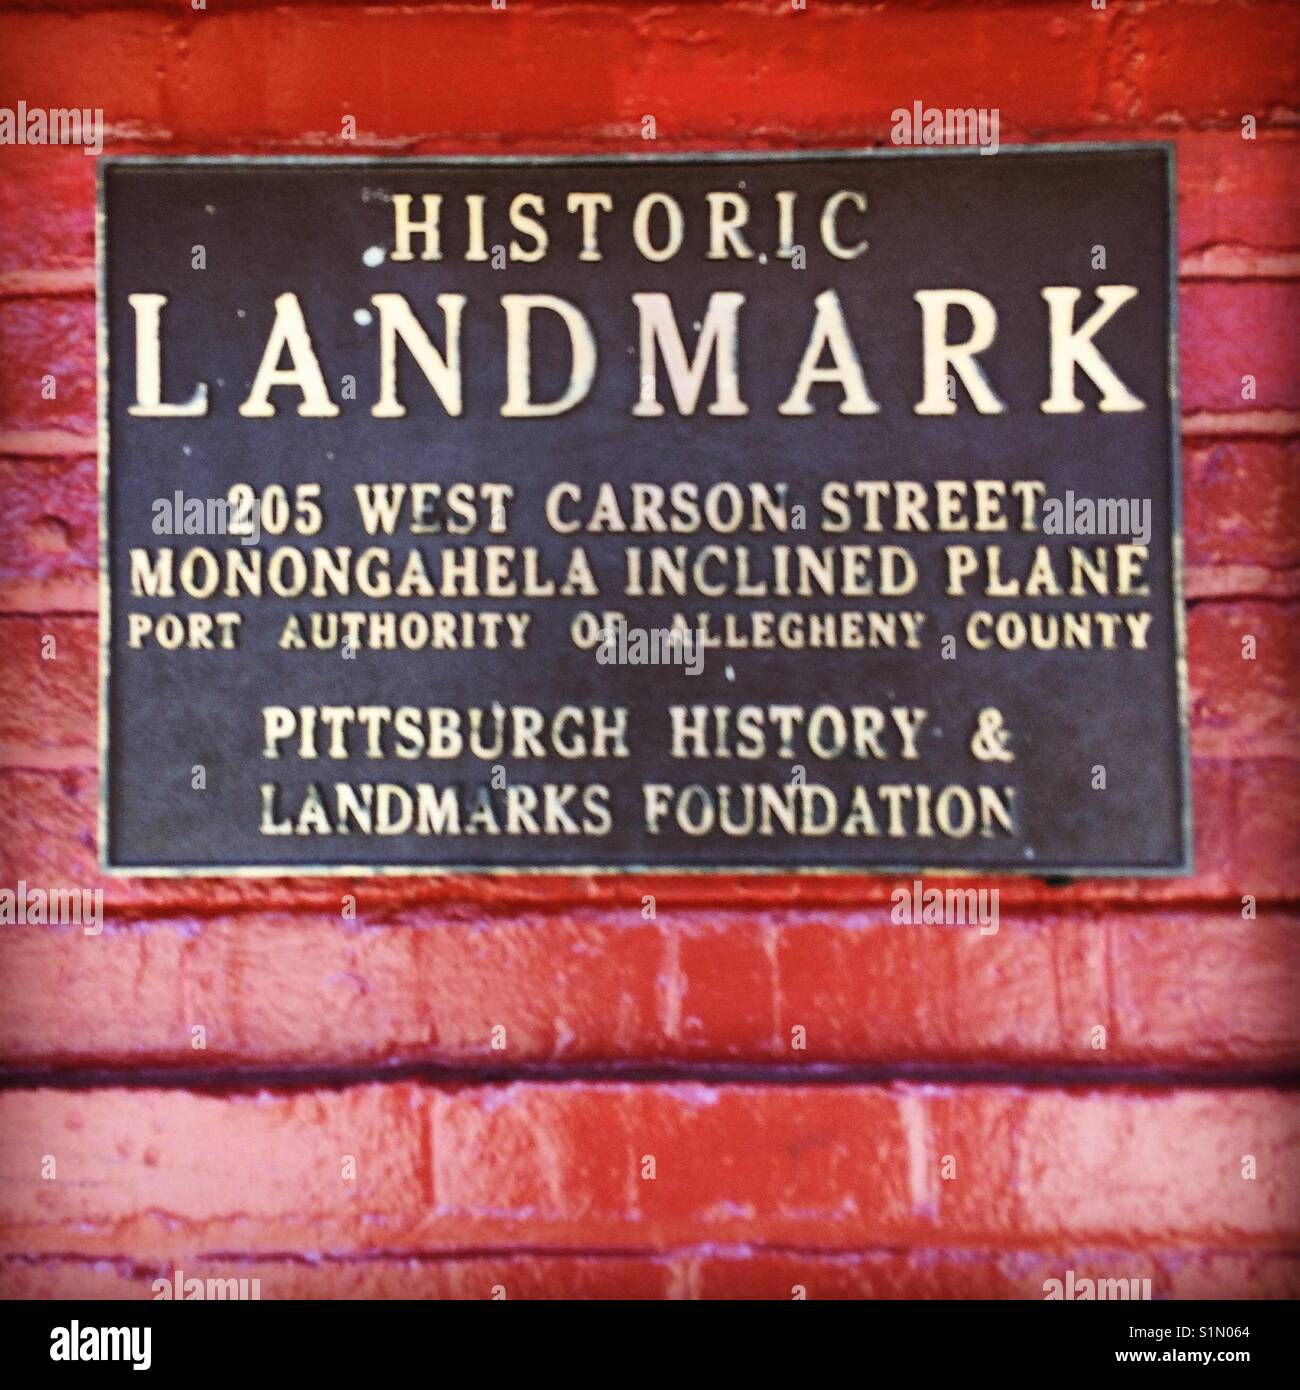 Monongahela Inclined Plane Historic Landmark Plaque, Pittsburgh, Pennsylvania. Stock Photo